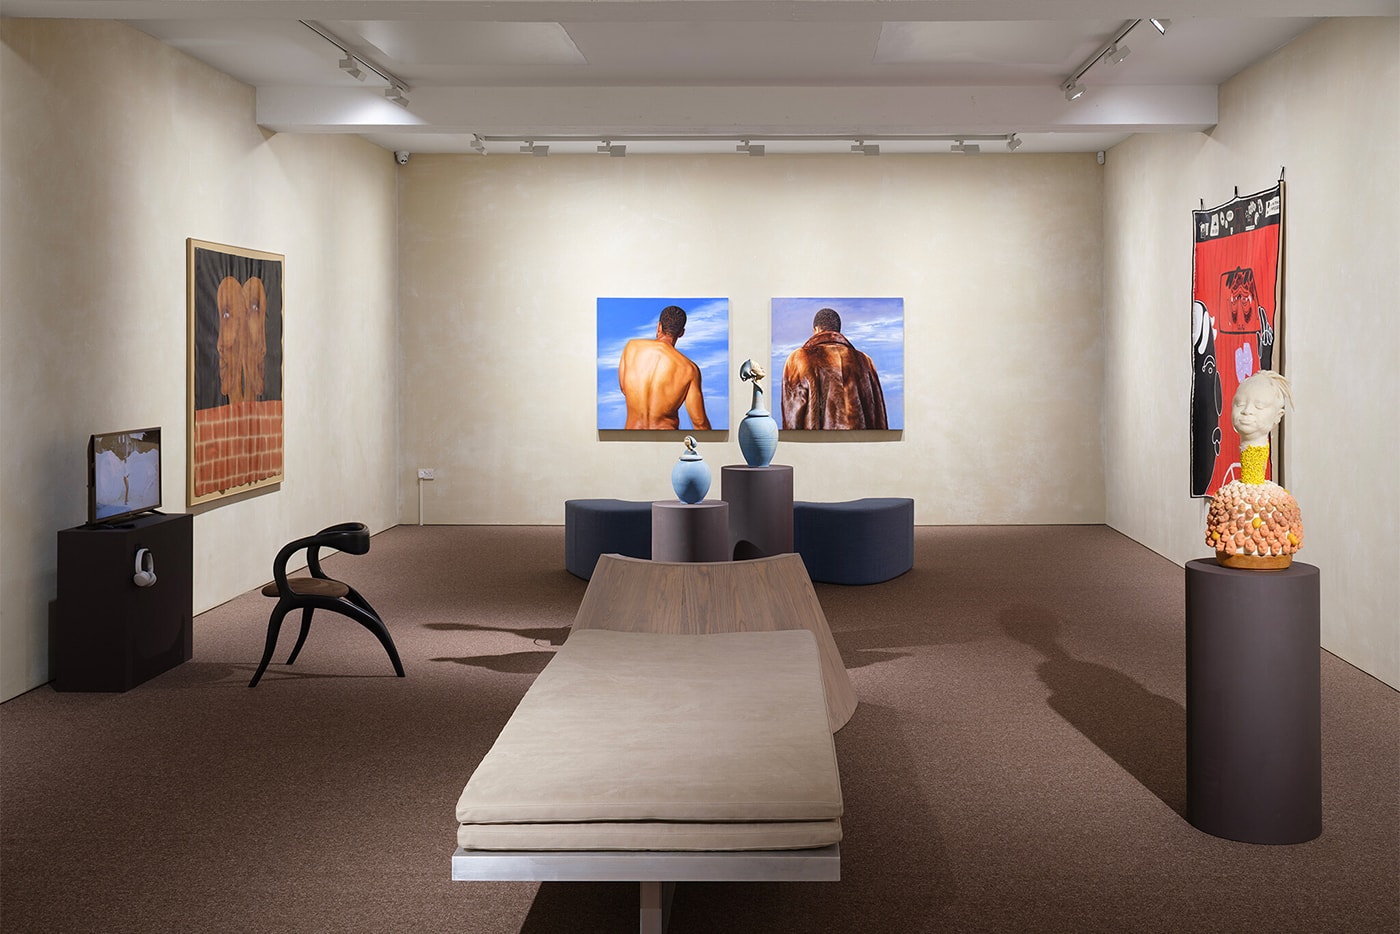 Ronan Mckenzie Explores Care and Comfort at Carl Freedman Gallery